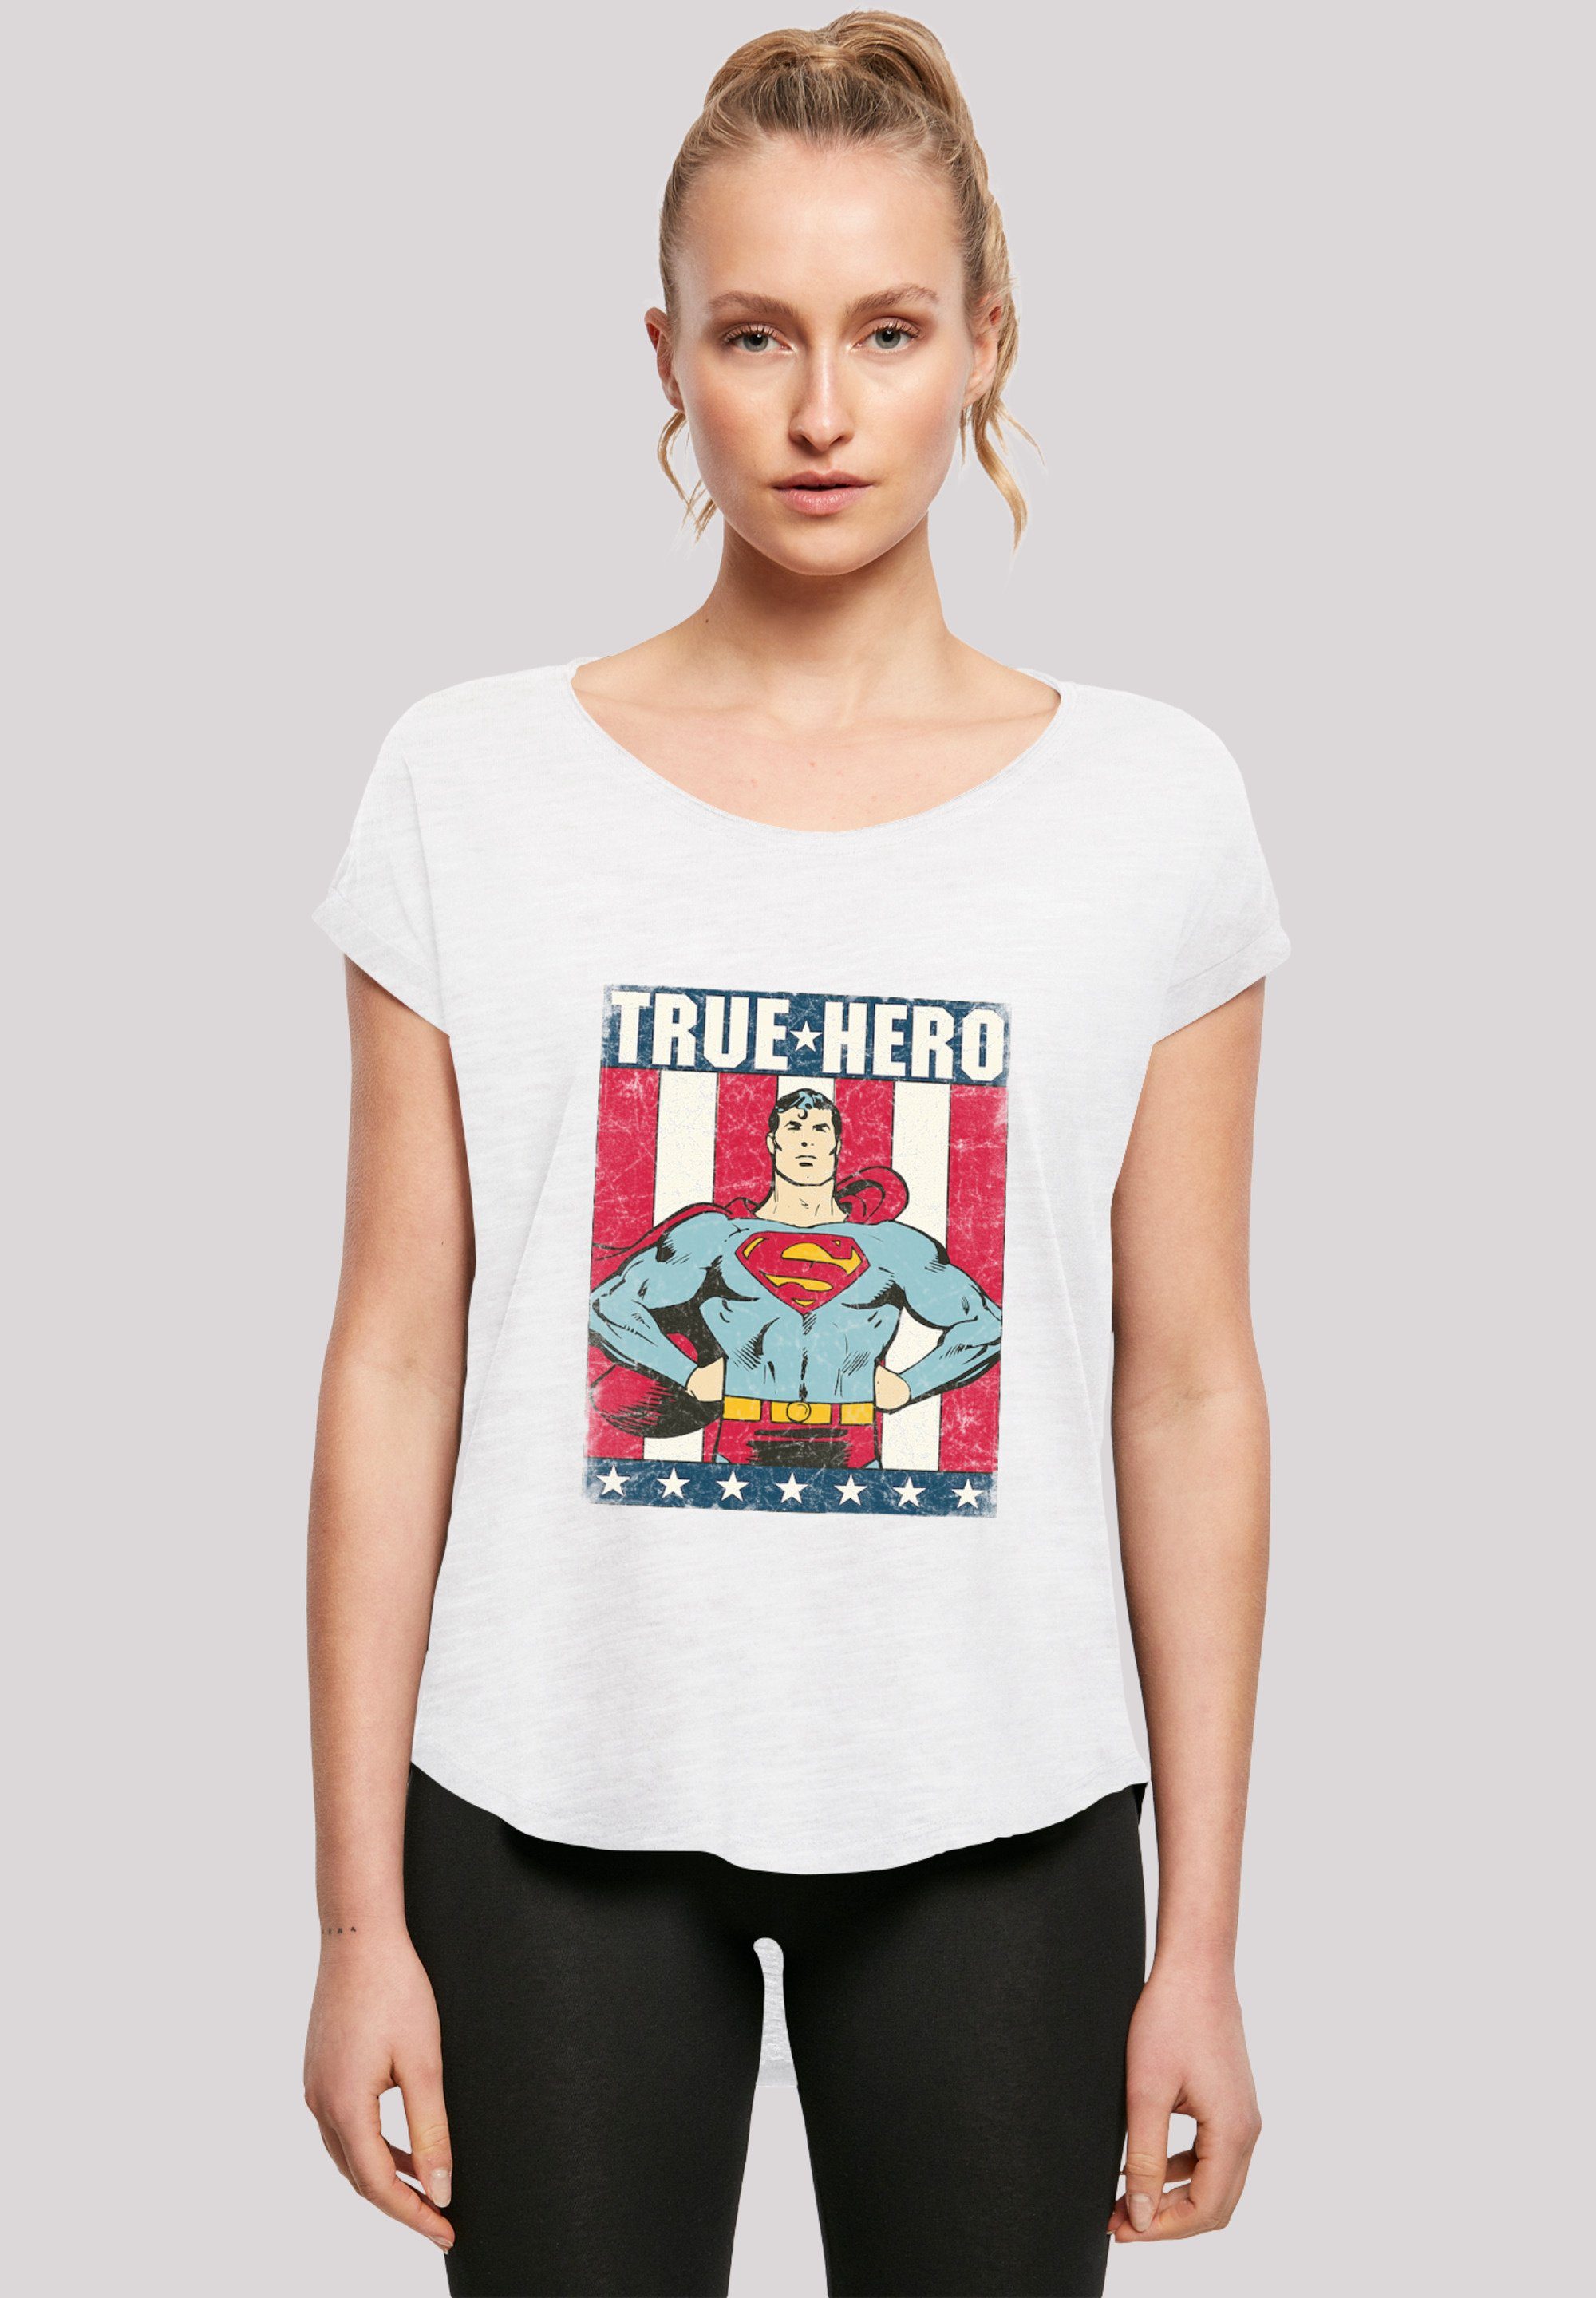 F4NT4STIC T-Shirt Long Hero T-Shirt Superman Cut DC Superheld Print Comics True